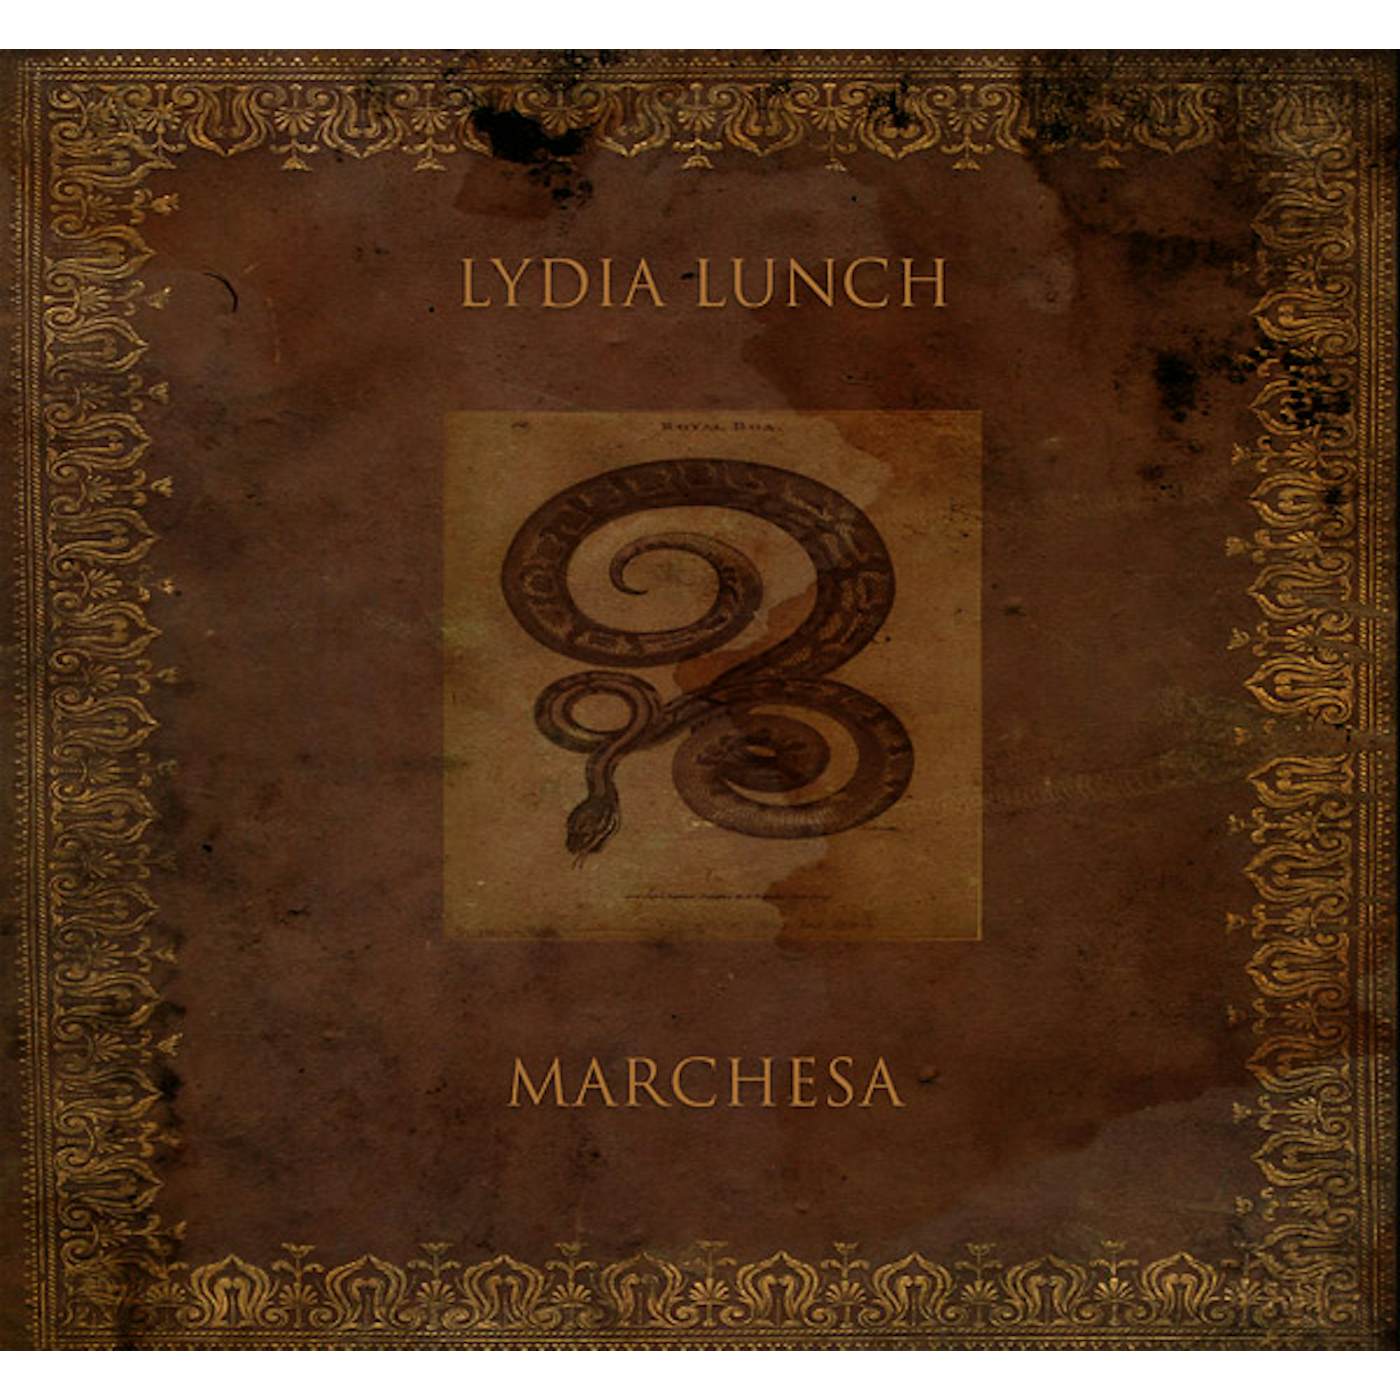 Lydia Lunch 67080 Marchesa Vinyl Record